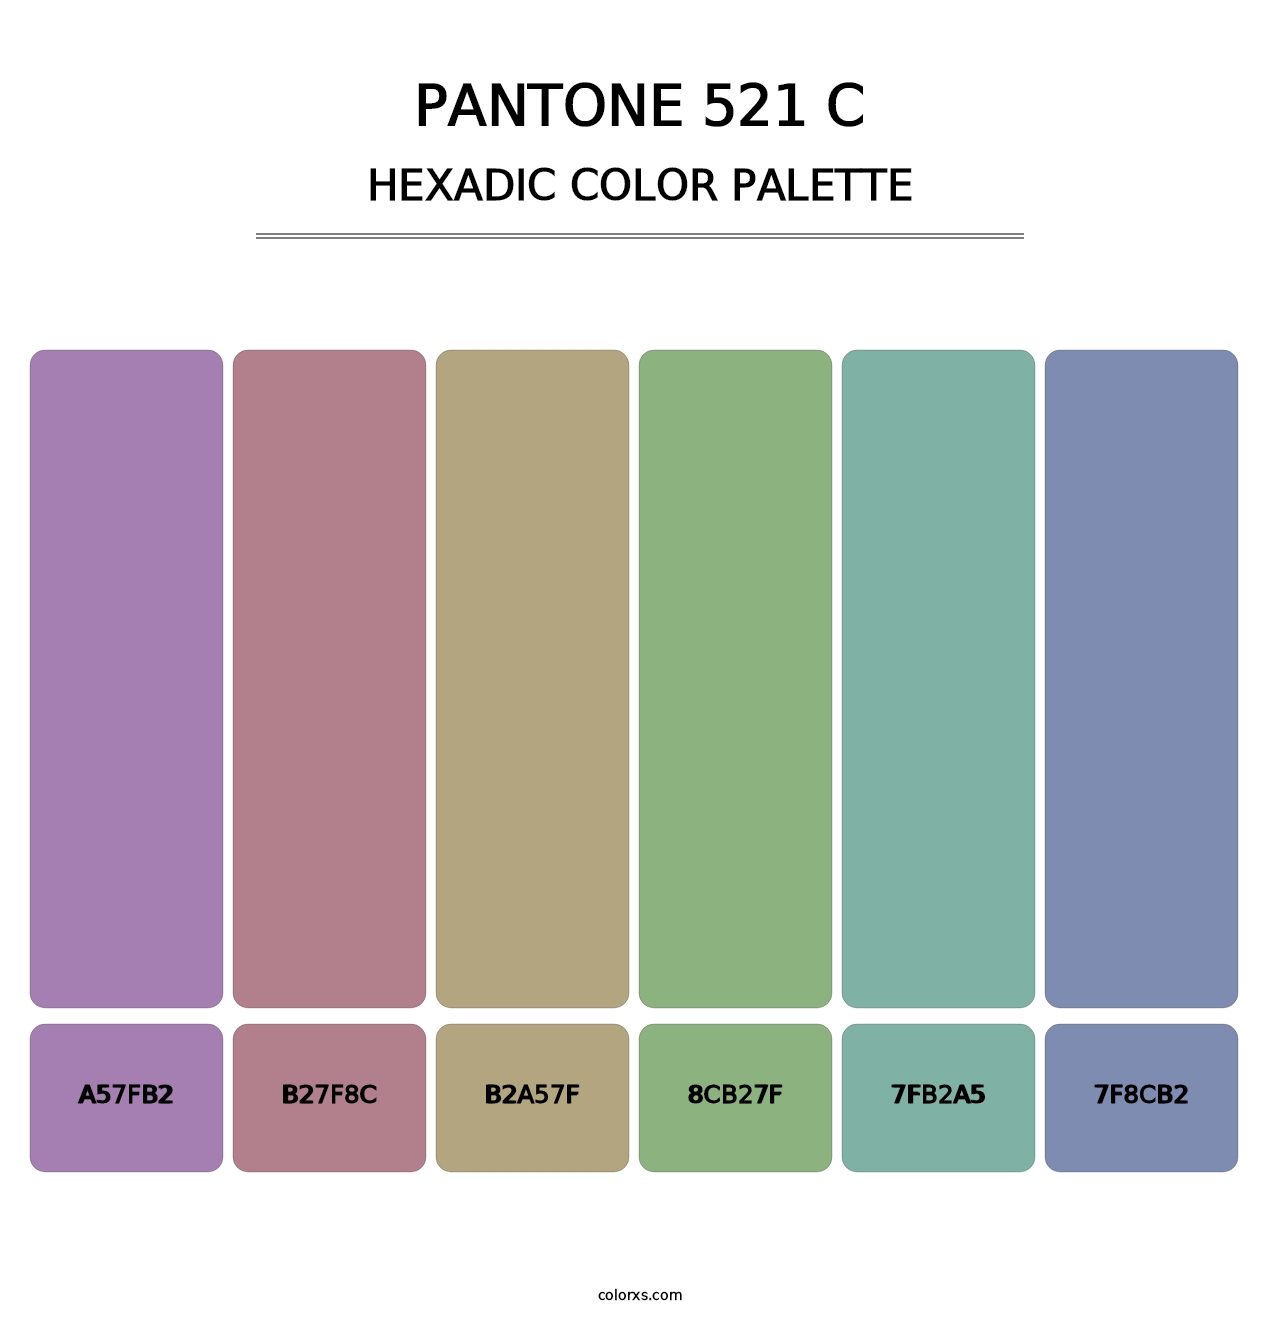 PANTONE 521 C - Hexadic Color Palette